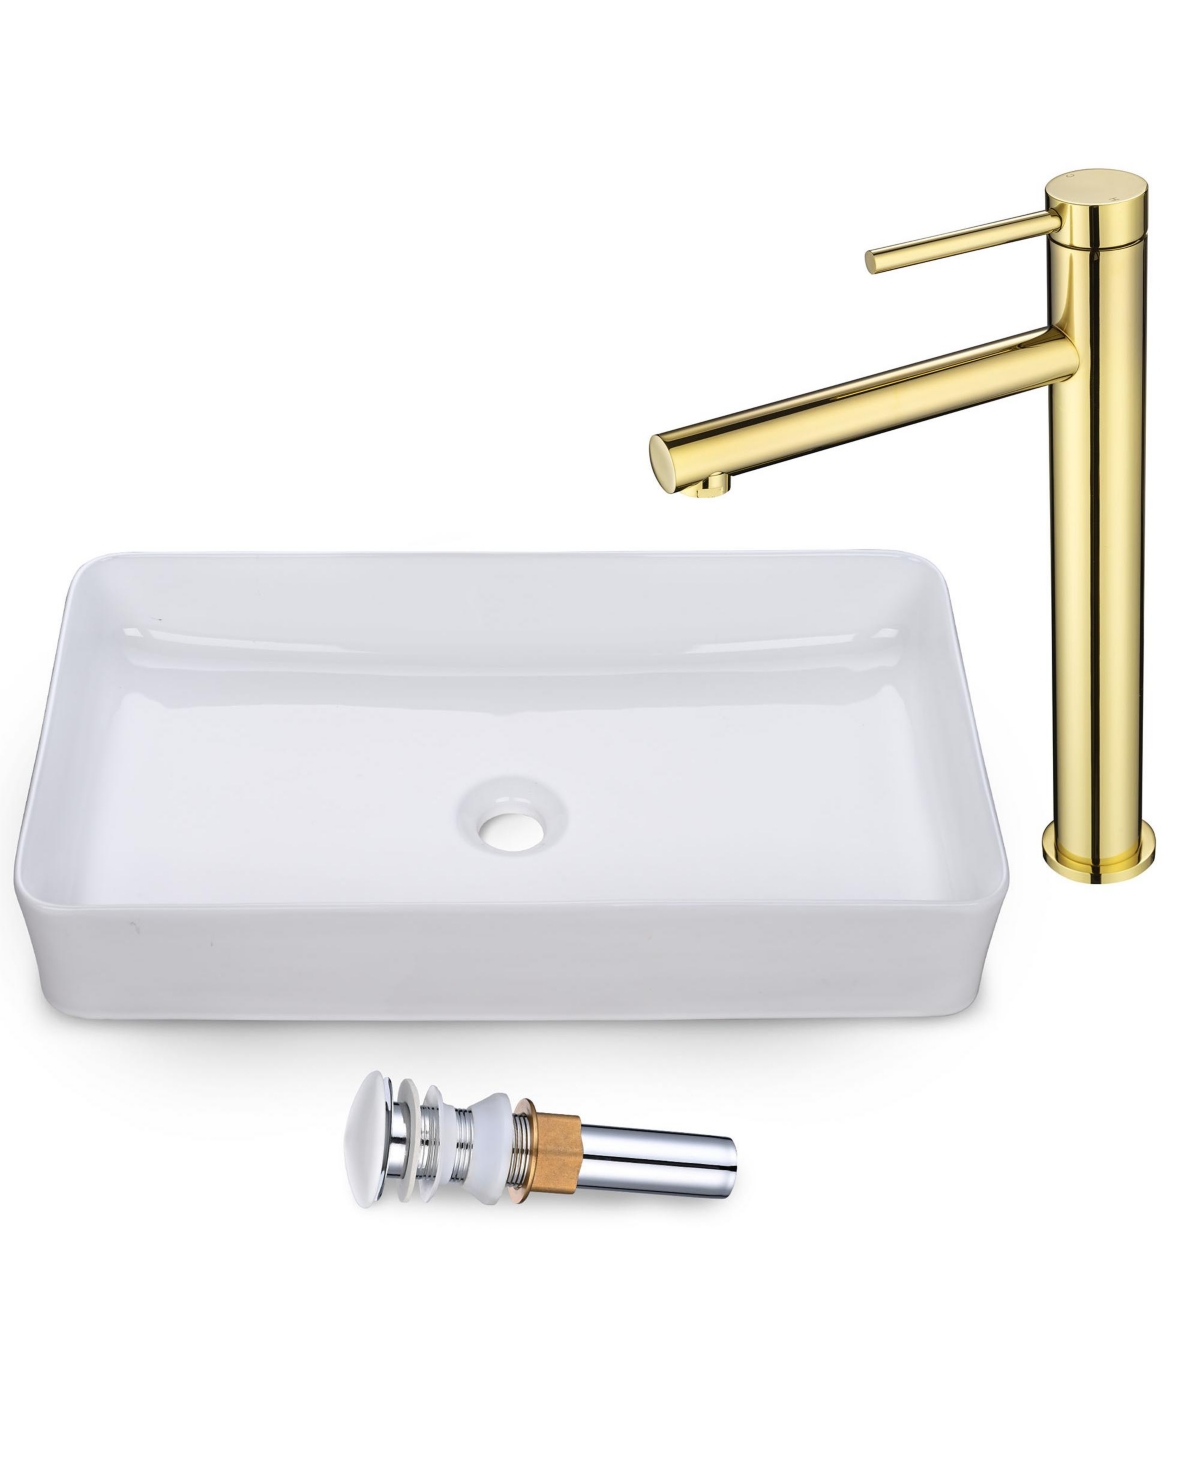 Rectangle Bathroom Countertop Vessel Sink & Gold Mixer Faucet Set w/Pop Up Drain - Natural